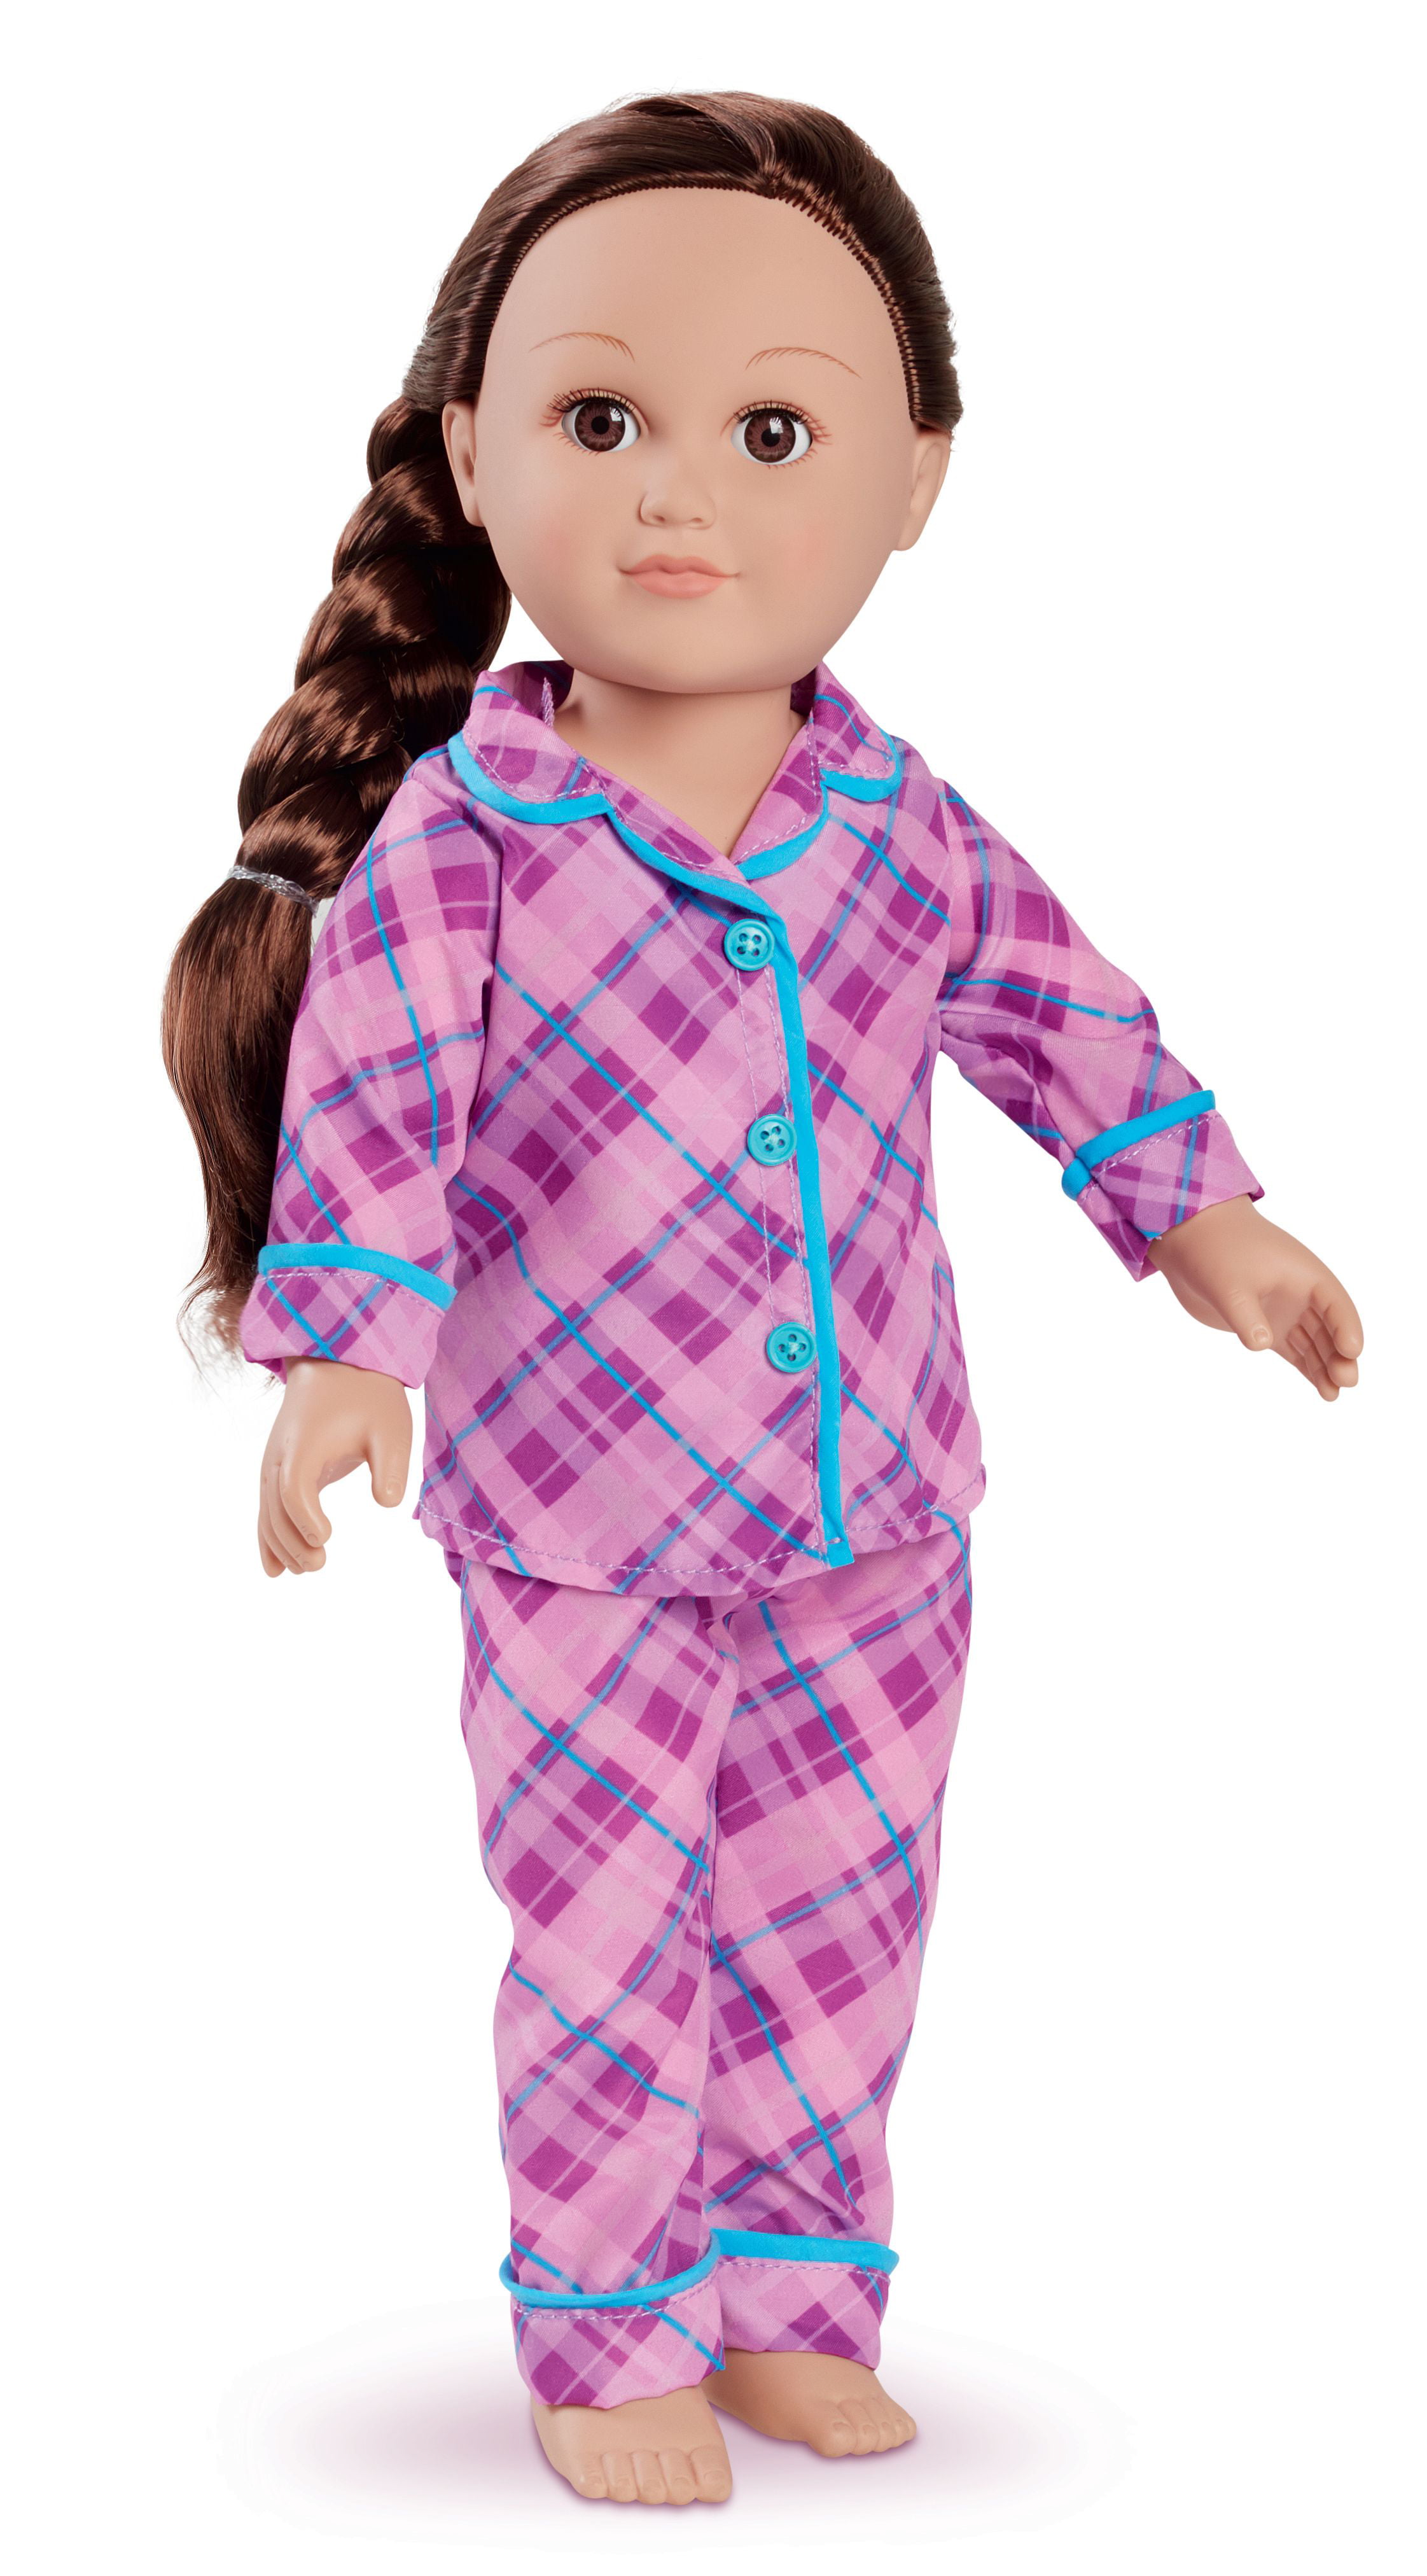 barbie doll online shop